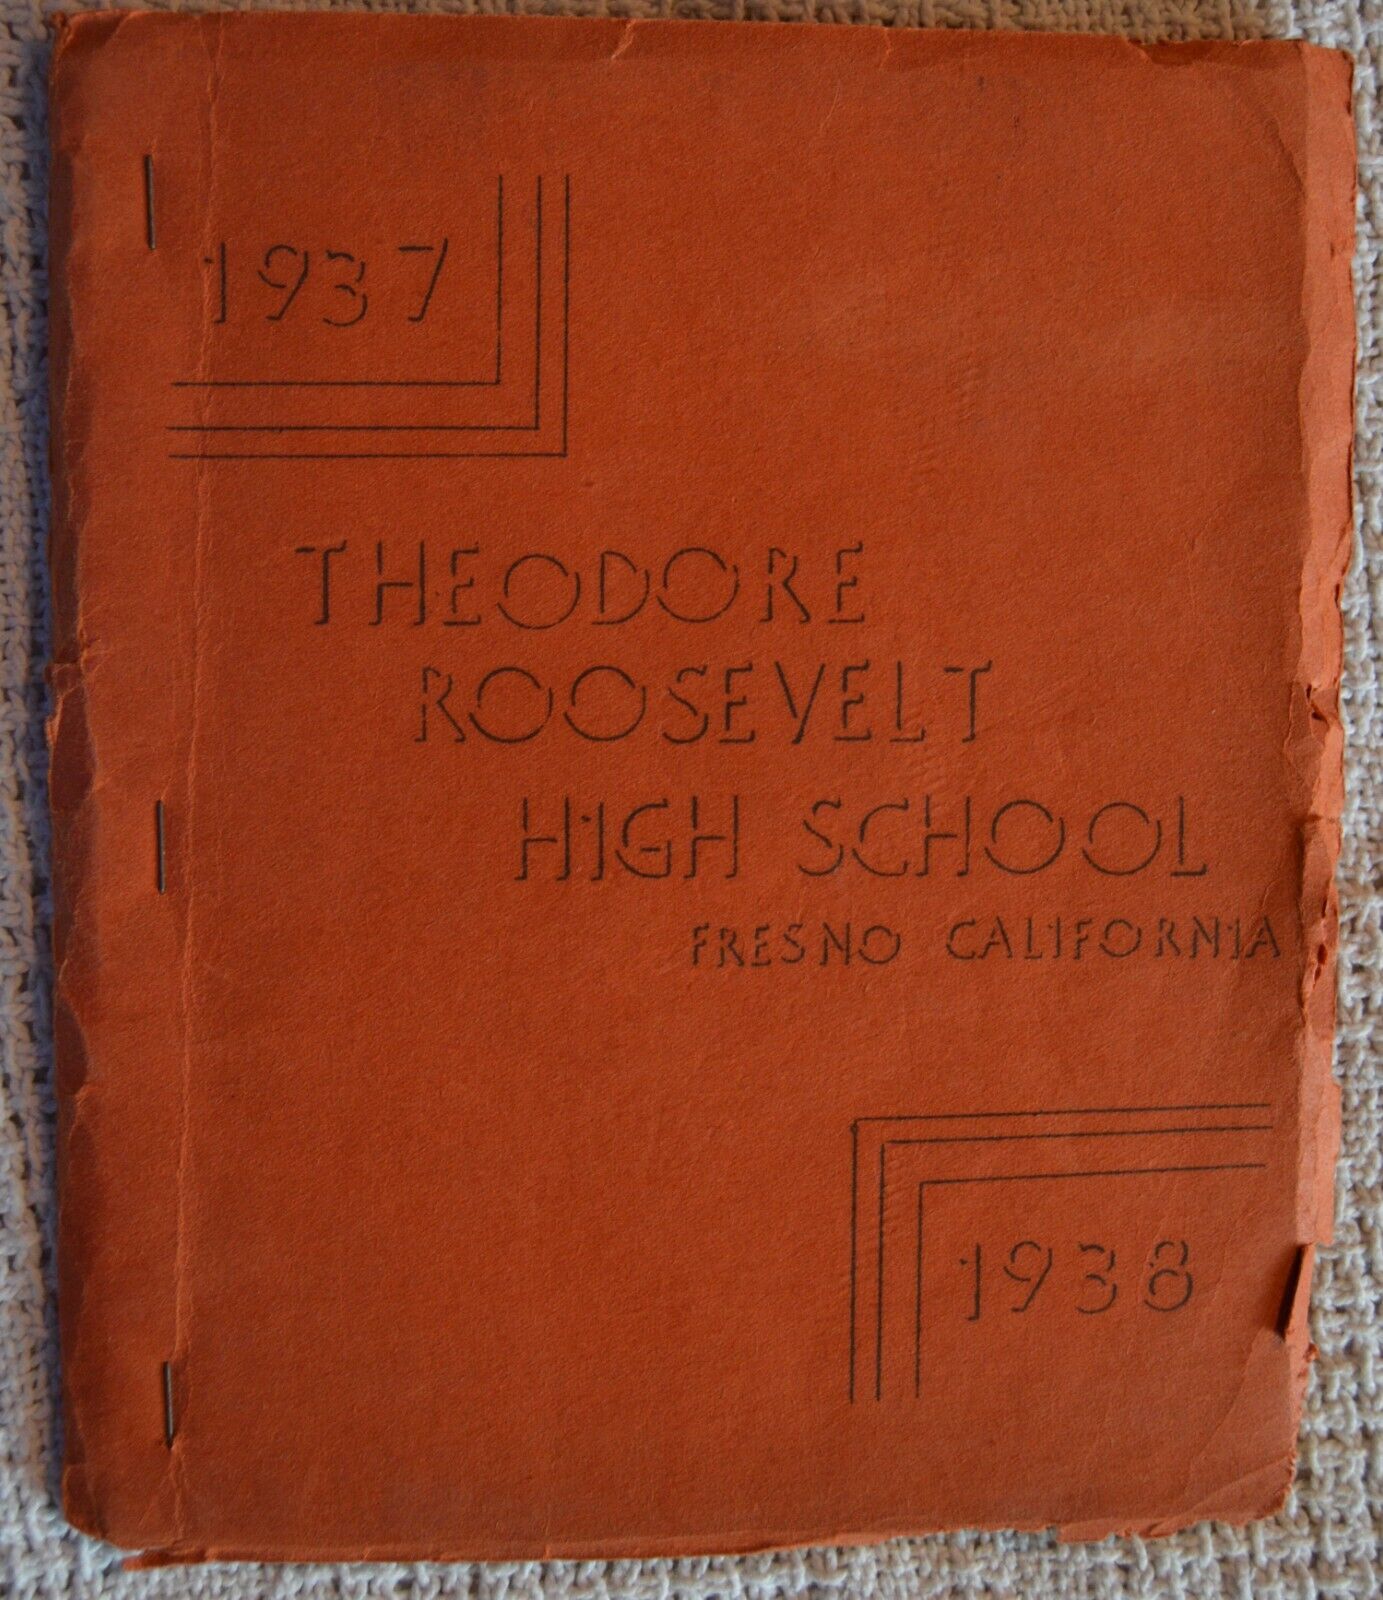 1937-38 THEODORE ROOSEVELT HIGH SCHOOL STUDENT MANUAL FRESNO, CA